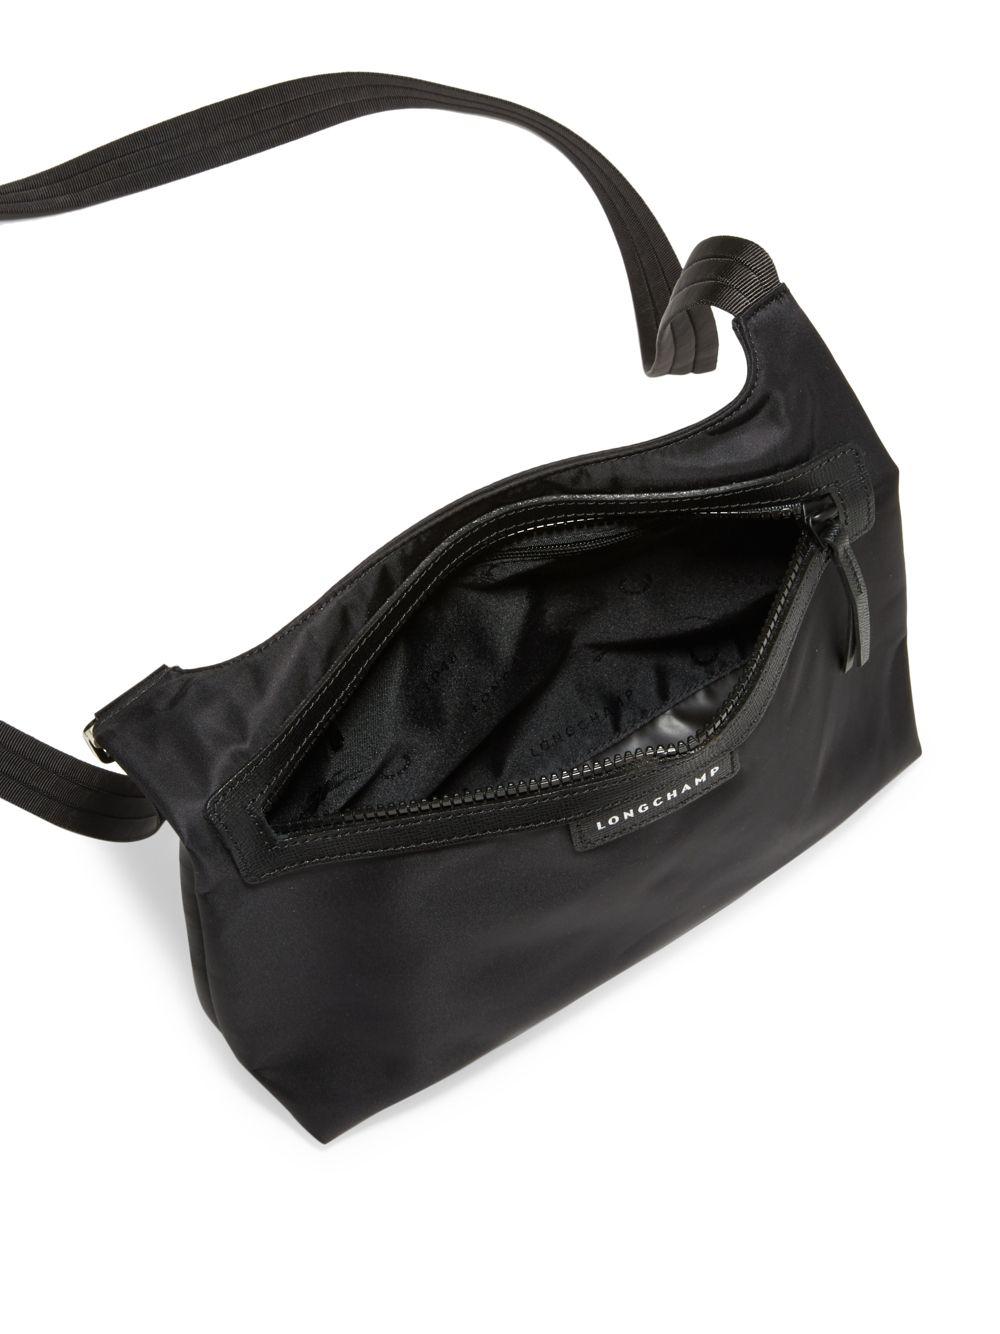 Longchamp Le Pliage Neo Nylon & Leather Messenger Bag in Black